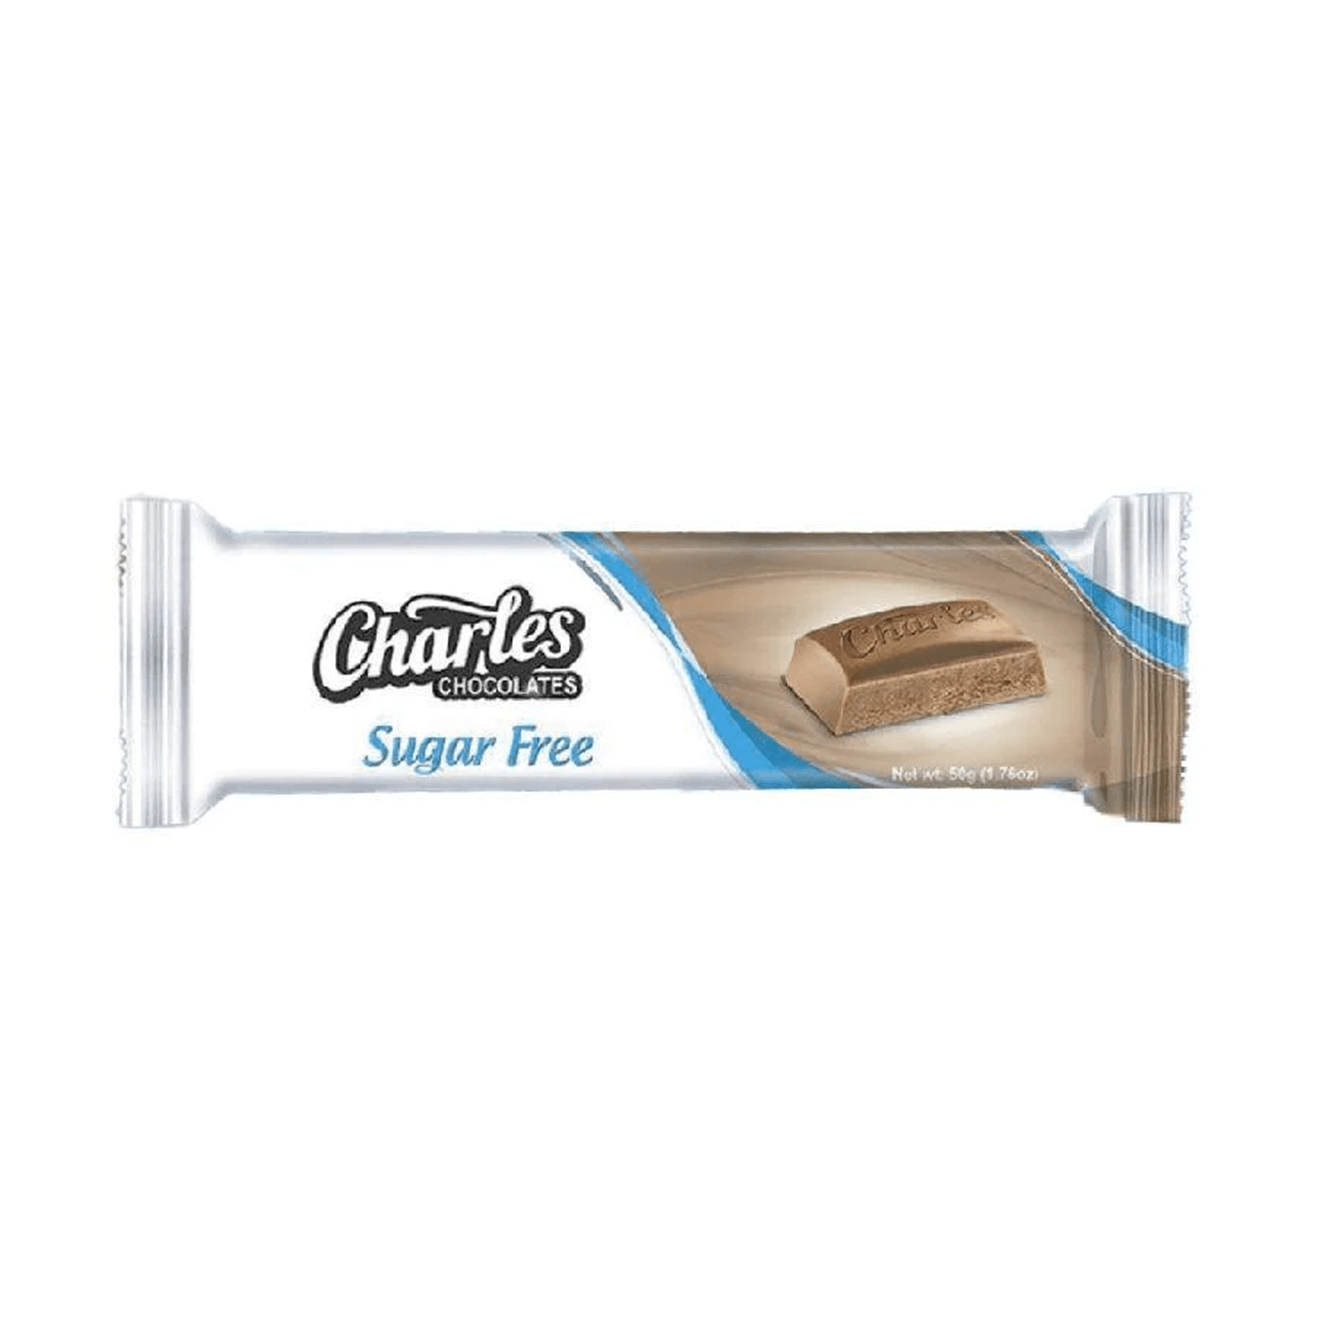 Chocolate Blanco Sin Azúcar – Chocolates Húngaros x 50g